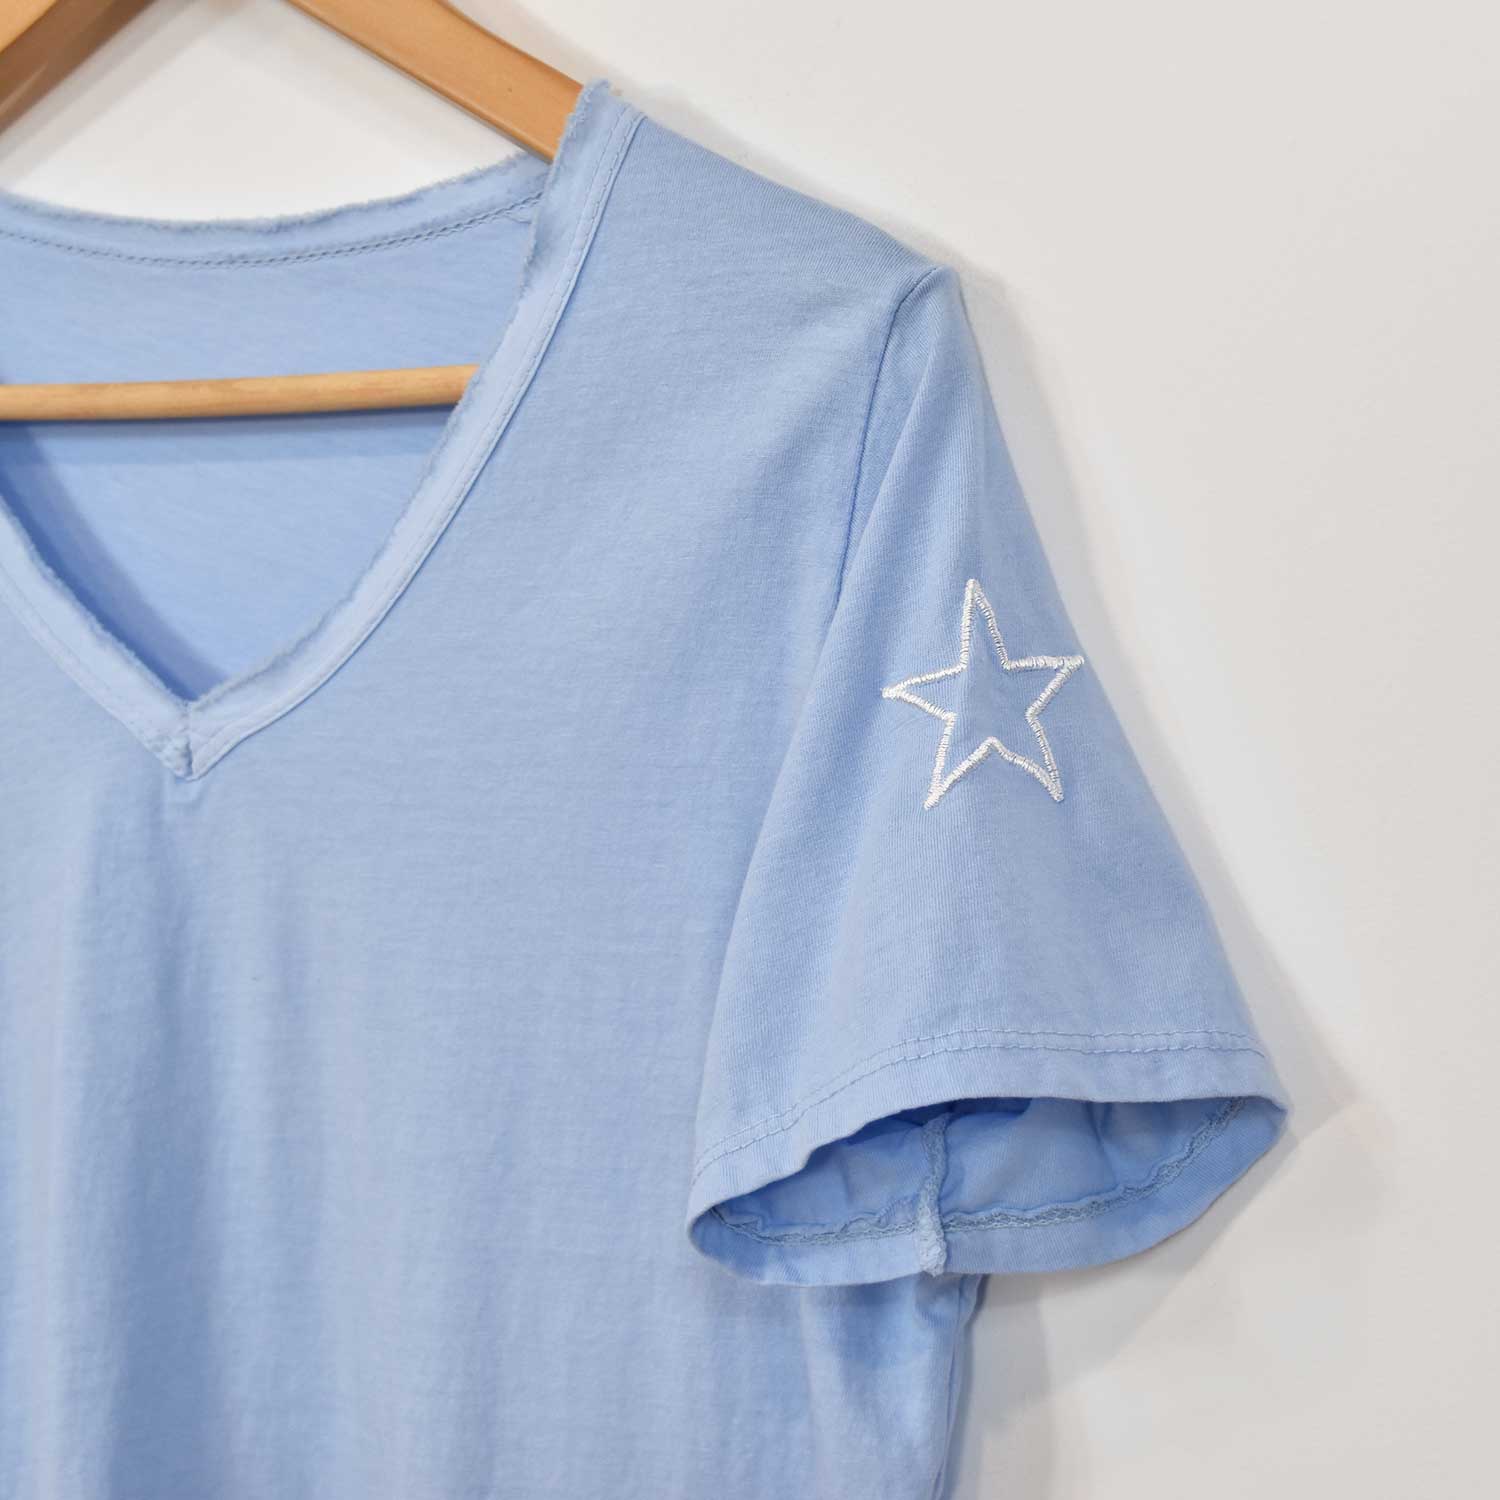 Camiseta estrella bordada azul